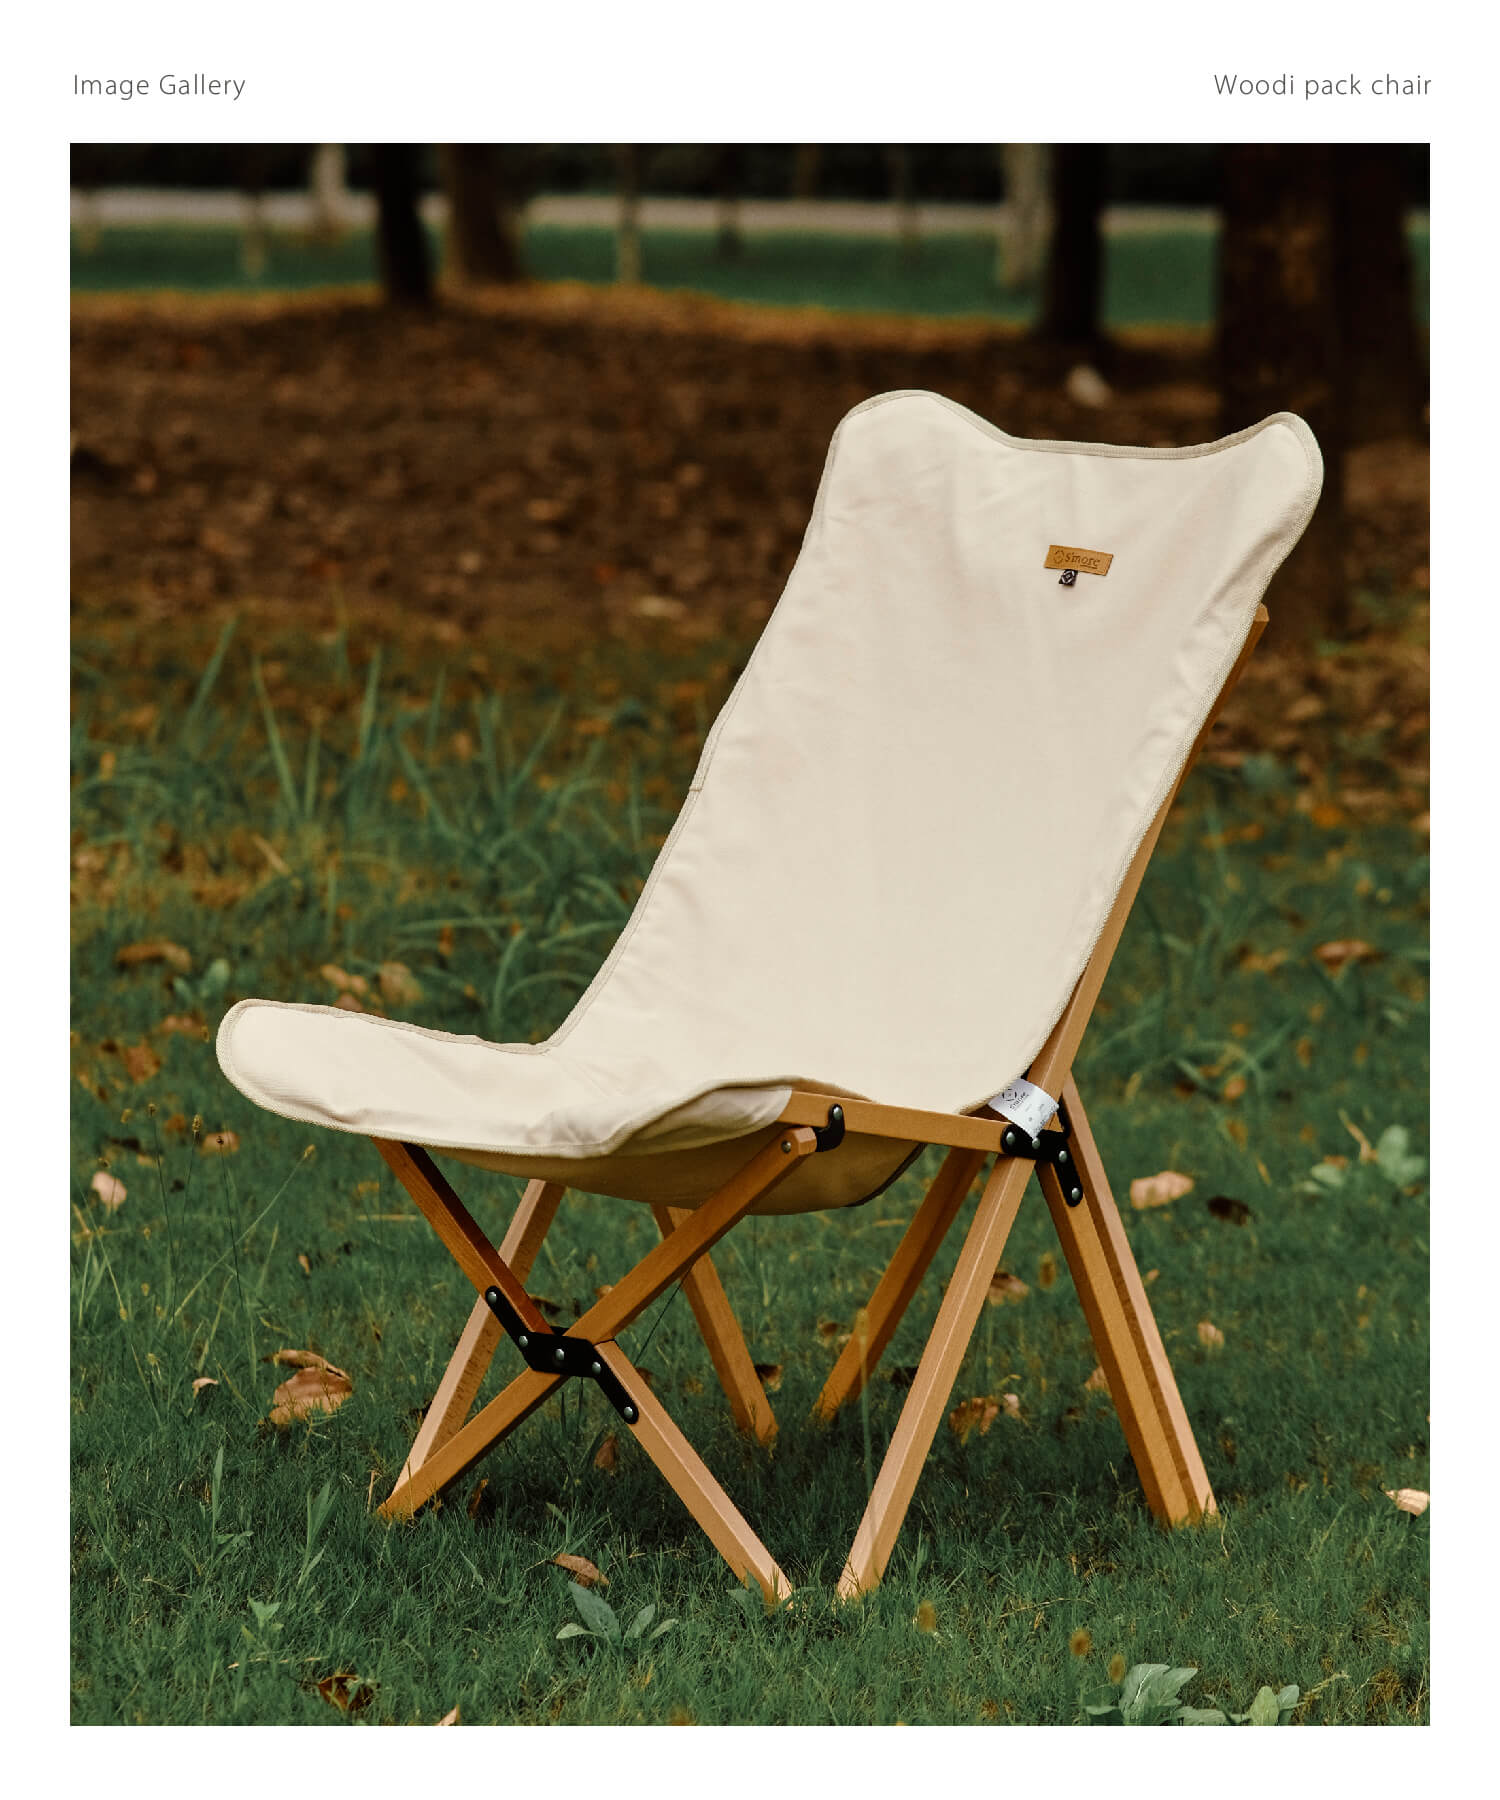 Woodi pack chair 】ウッディーパックチェア ブナ材 木製キャンバス